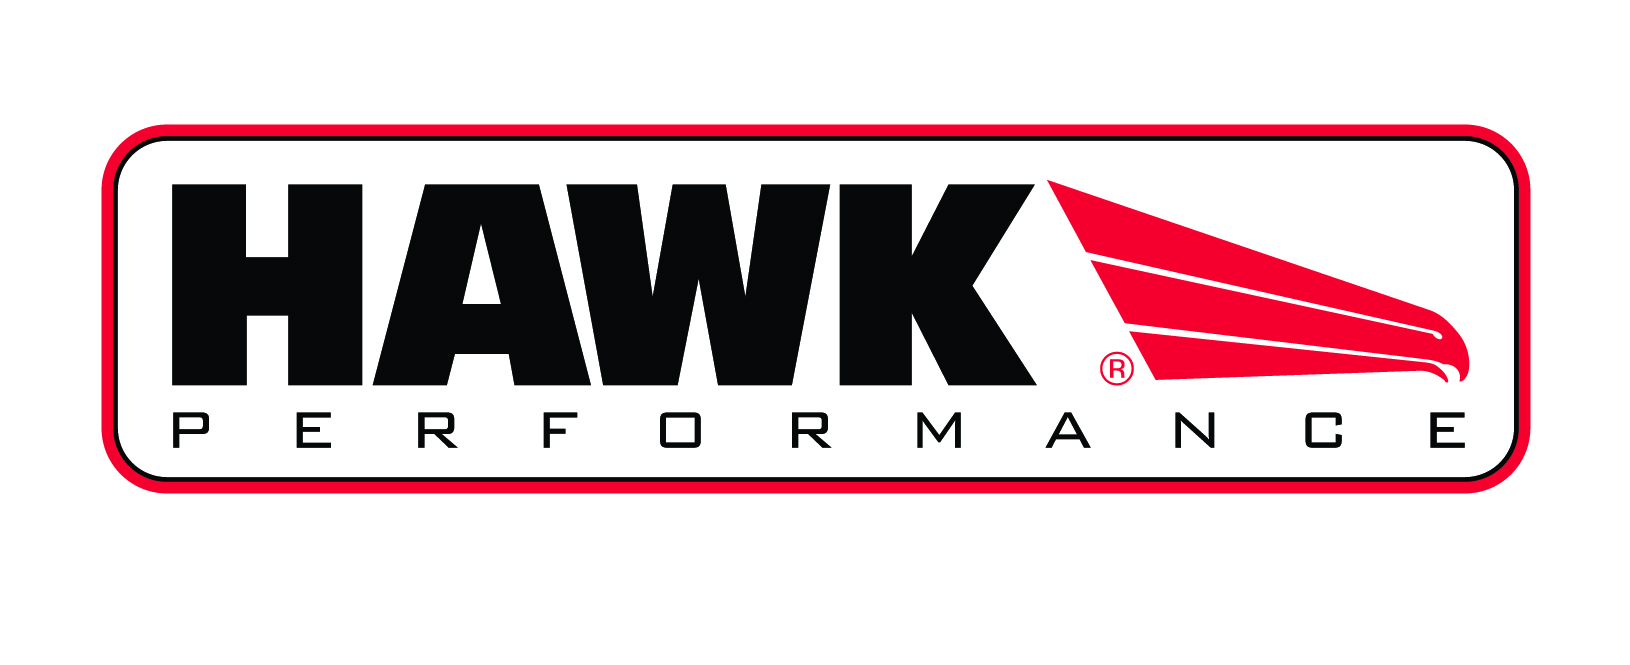 Brzdové kotouče Hawk Performance Ford Mustang (5th Gen) 2004-2014